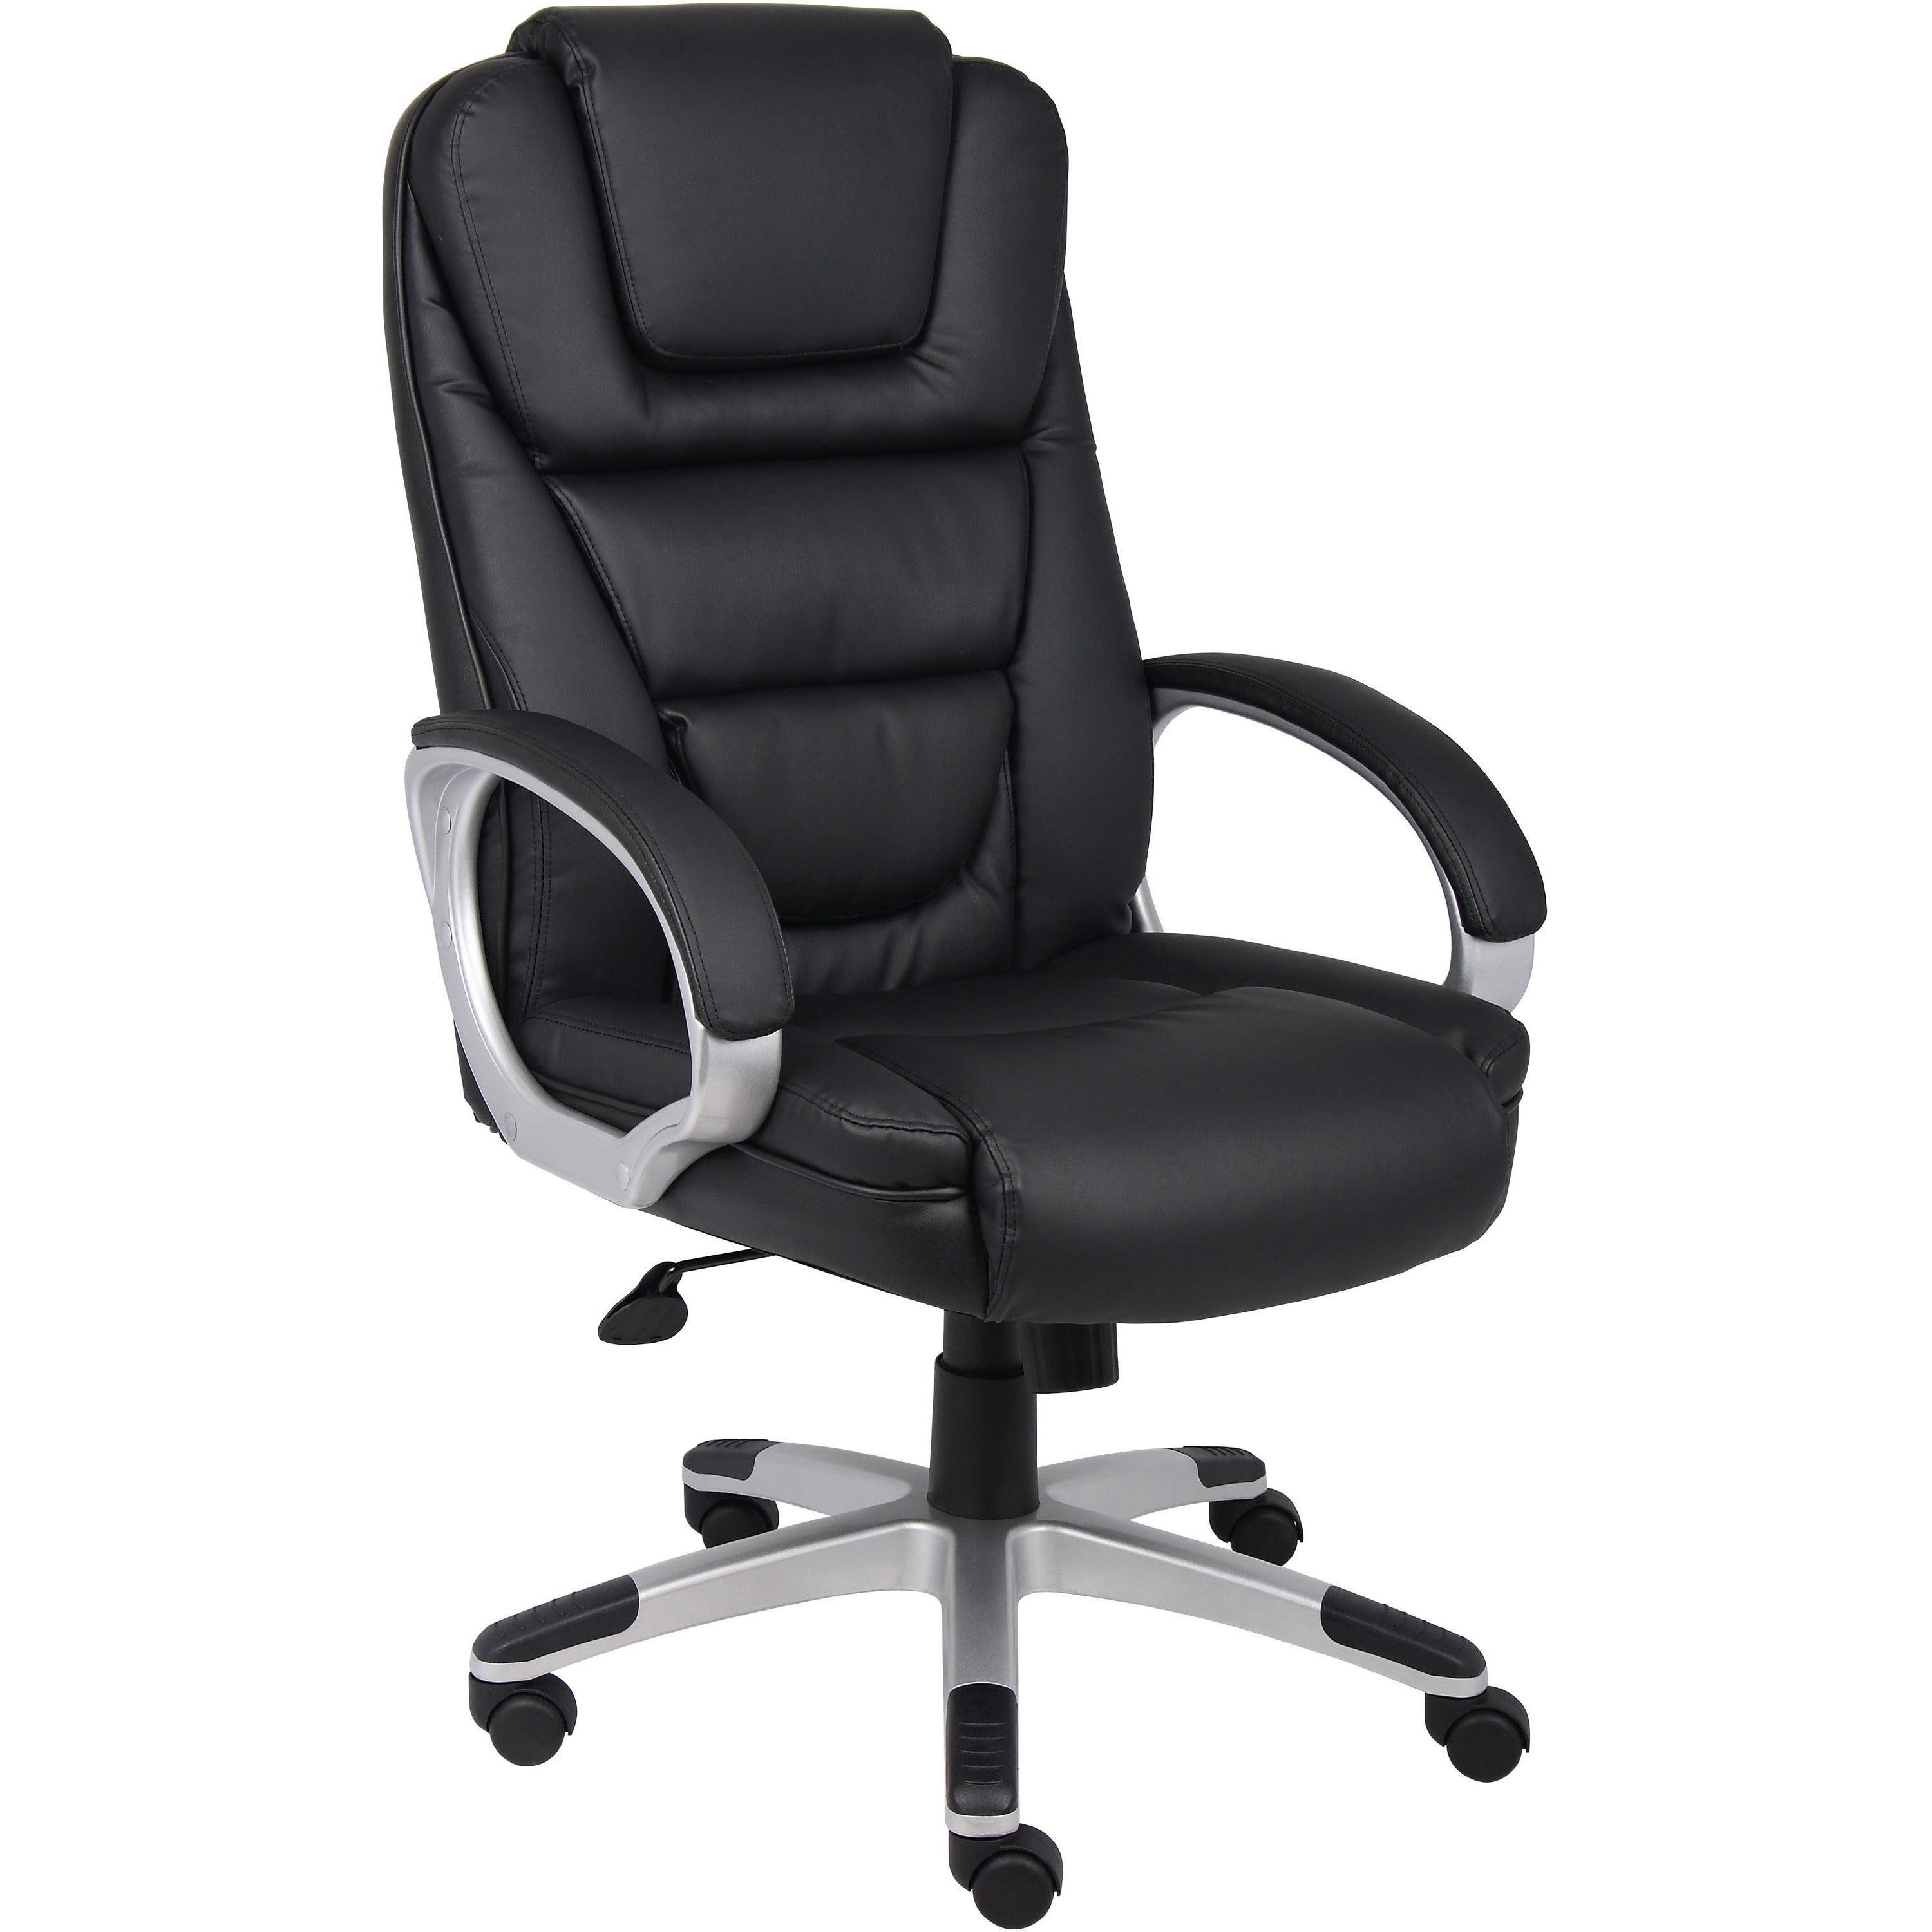 Boss High Back Executive Chair - Black LeatherPlus Seat - Black, Gray Nylon Frame - 5-star Base - 1 Each - 1